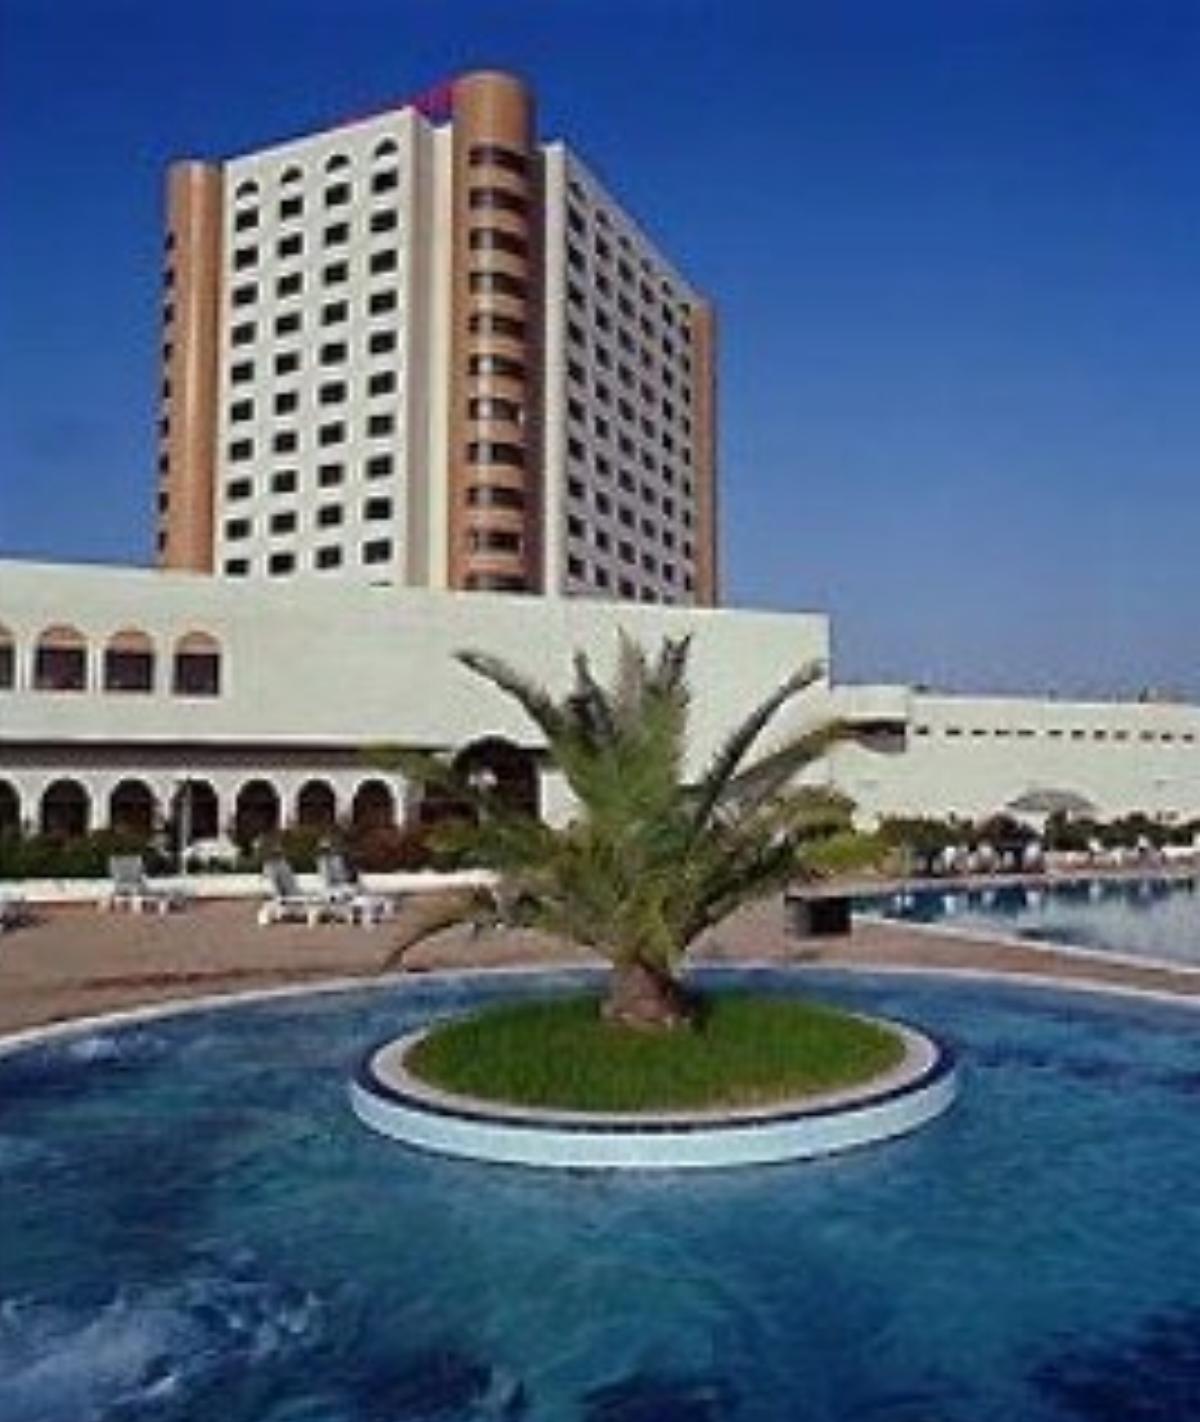 Mercure Alger Grand Hotel Hotel Algiers Algeria